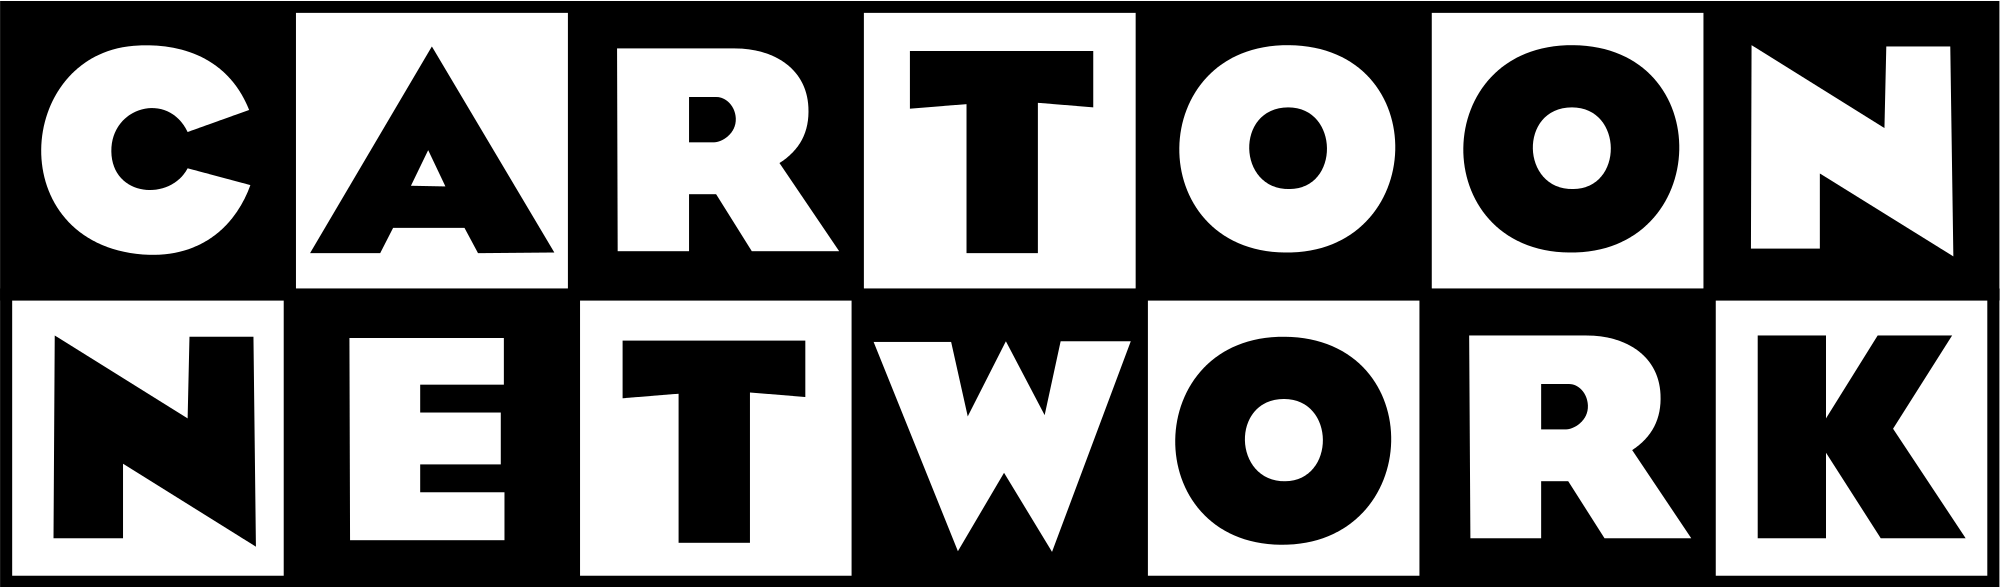 CN Cartoon Network Logo - File:Cartoon Network 1992 logo.svg - Wikimedia Commons